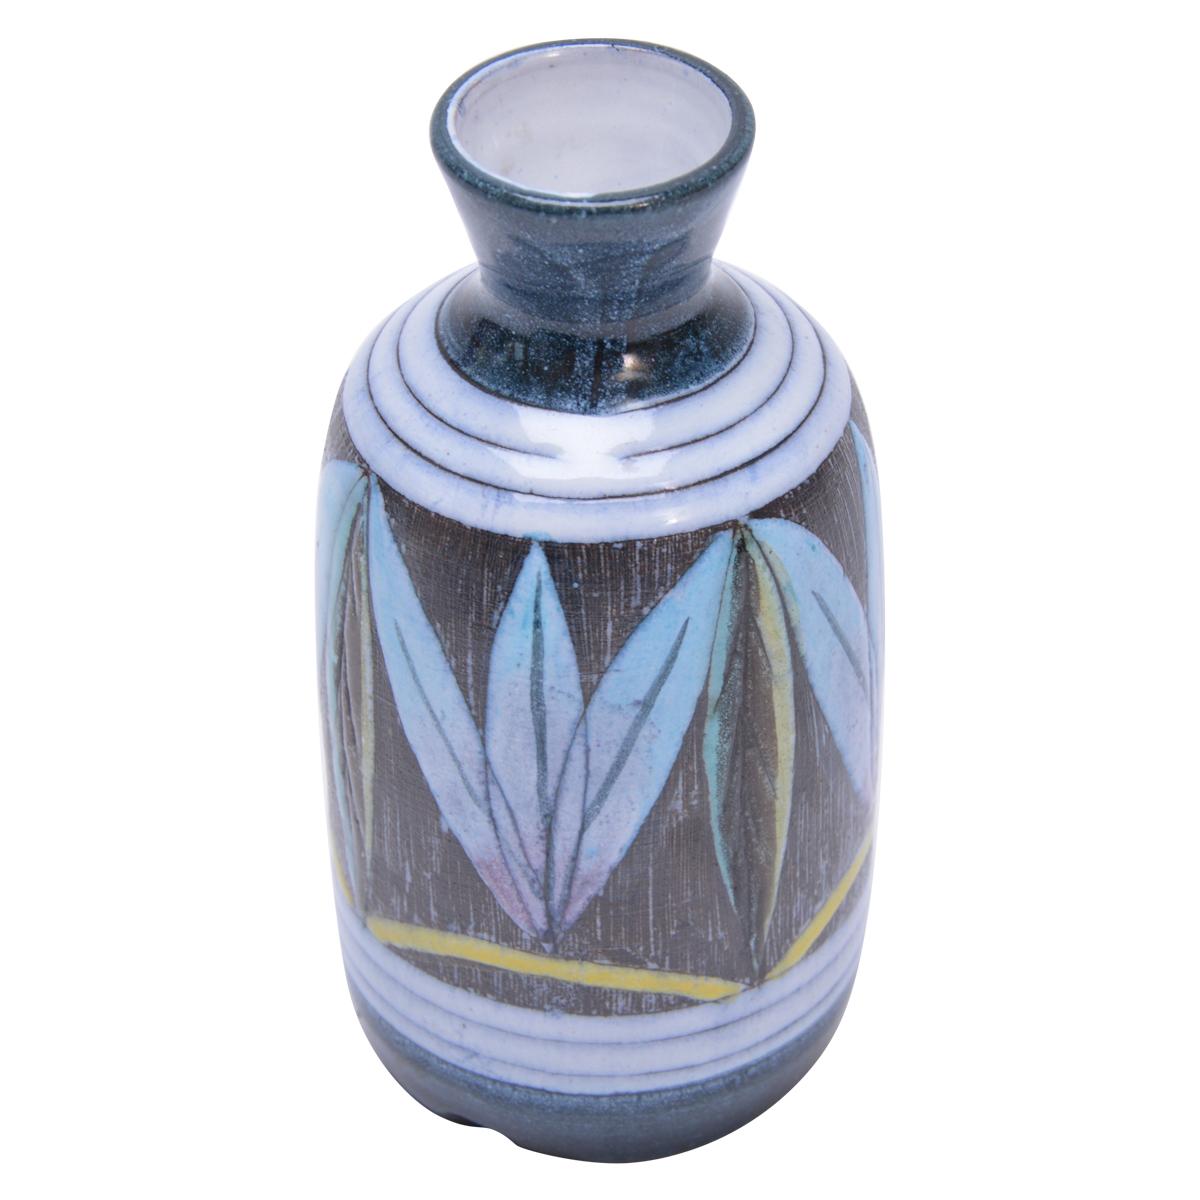 Swedish Mid-Century Modern ceramic vase from Alingsås Ceramic, 1960s